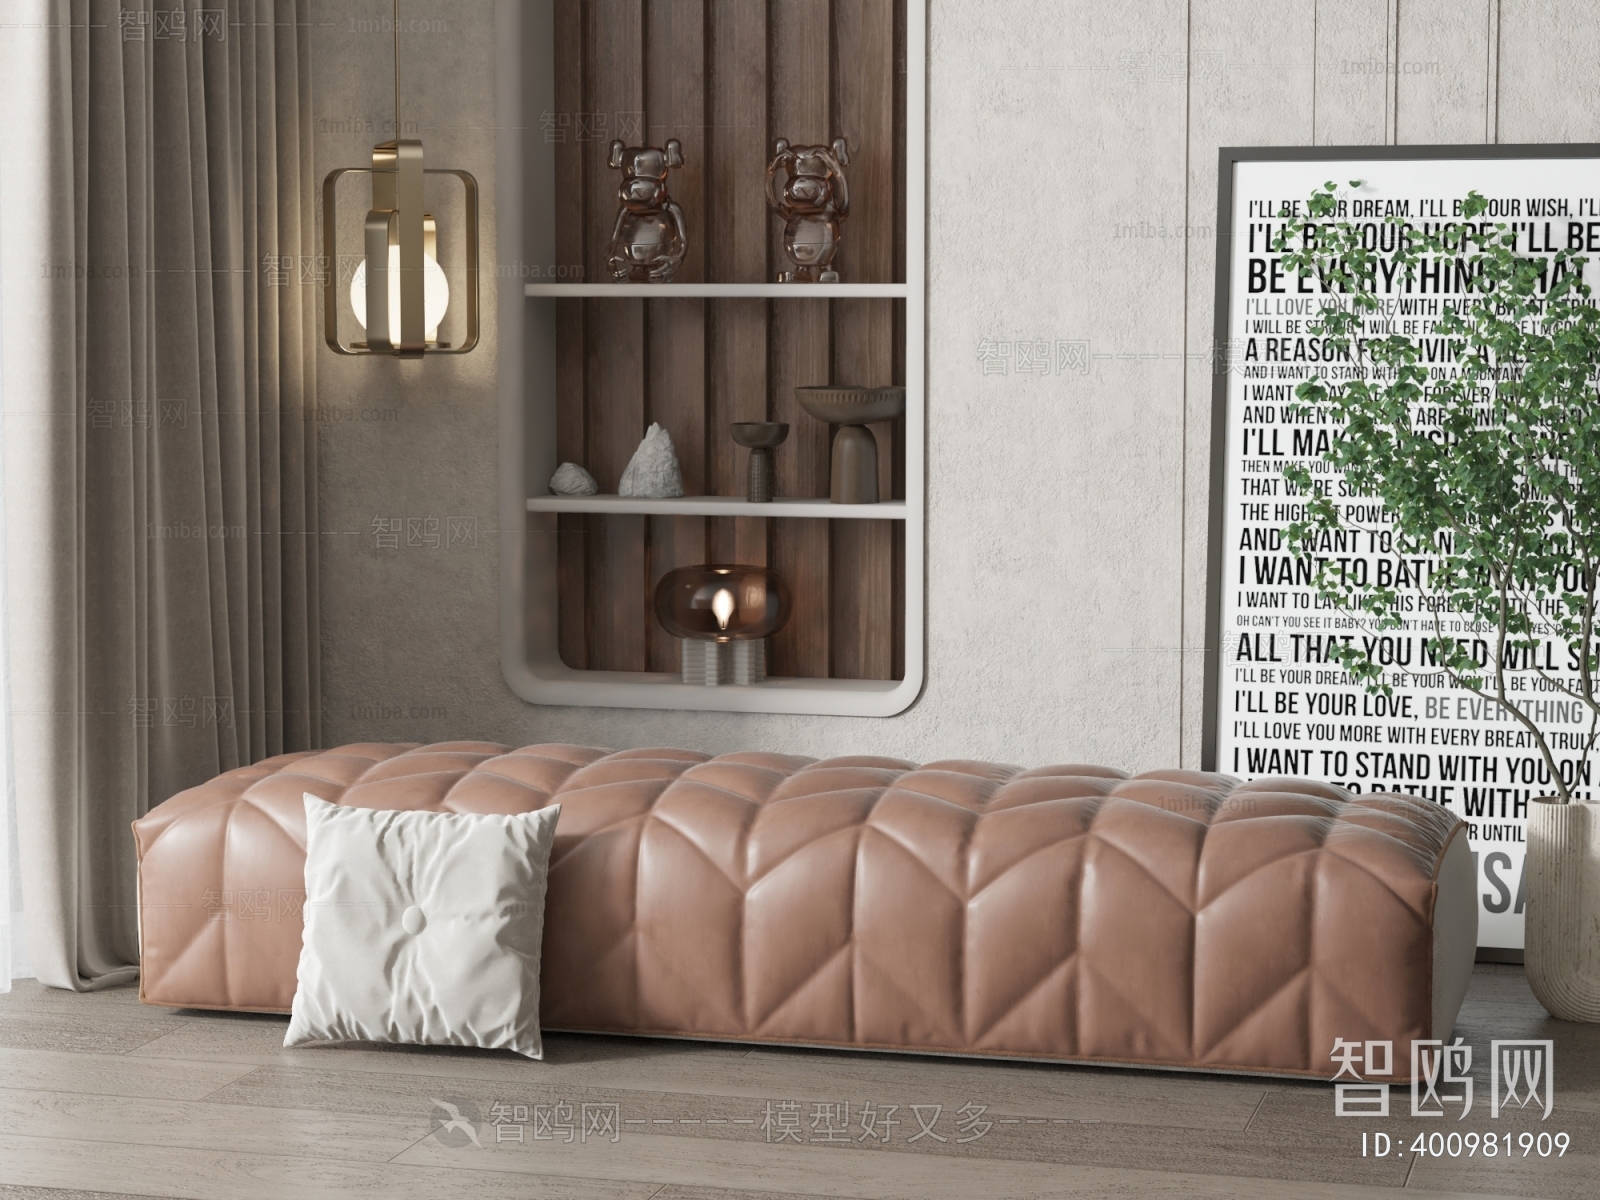 Simple European Style Sofa Stool